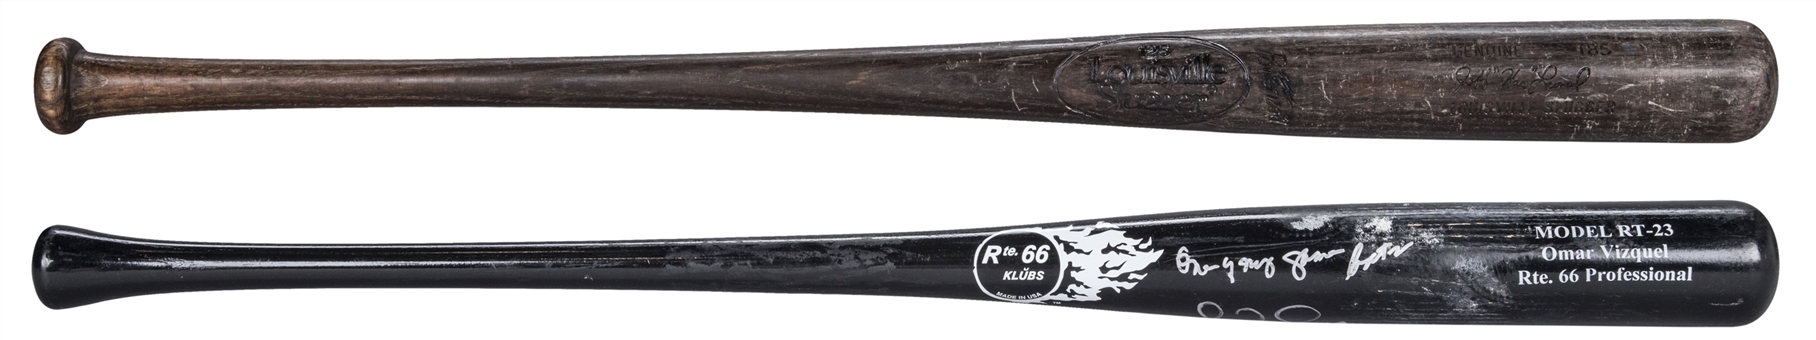 Lot of (2) Game Used Bats - 1983-86 Jeffrey Leonard T85 Model and 2005-06 Omar Vizquel RT-23 Model(Also Signed/Inscribed) (PSA/DNA) 